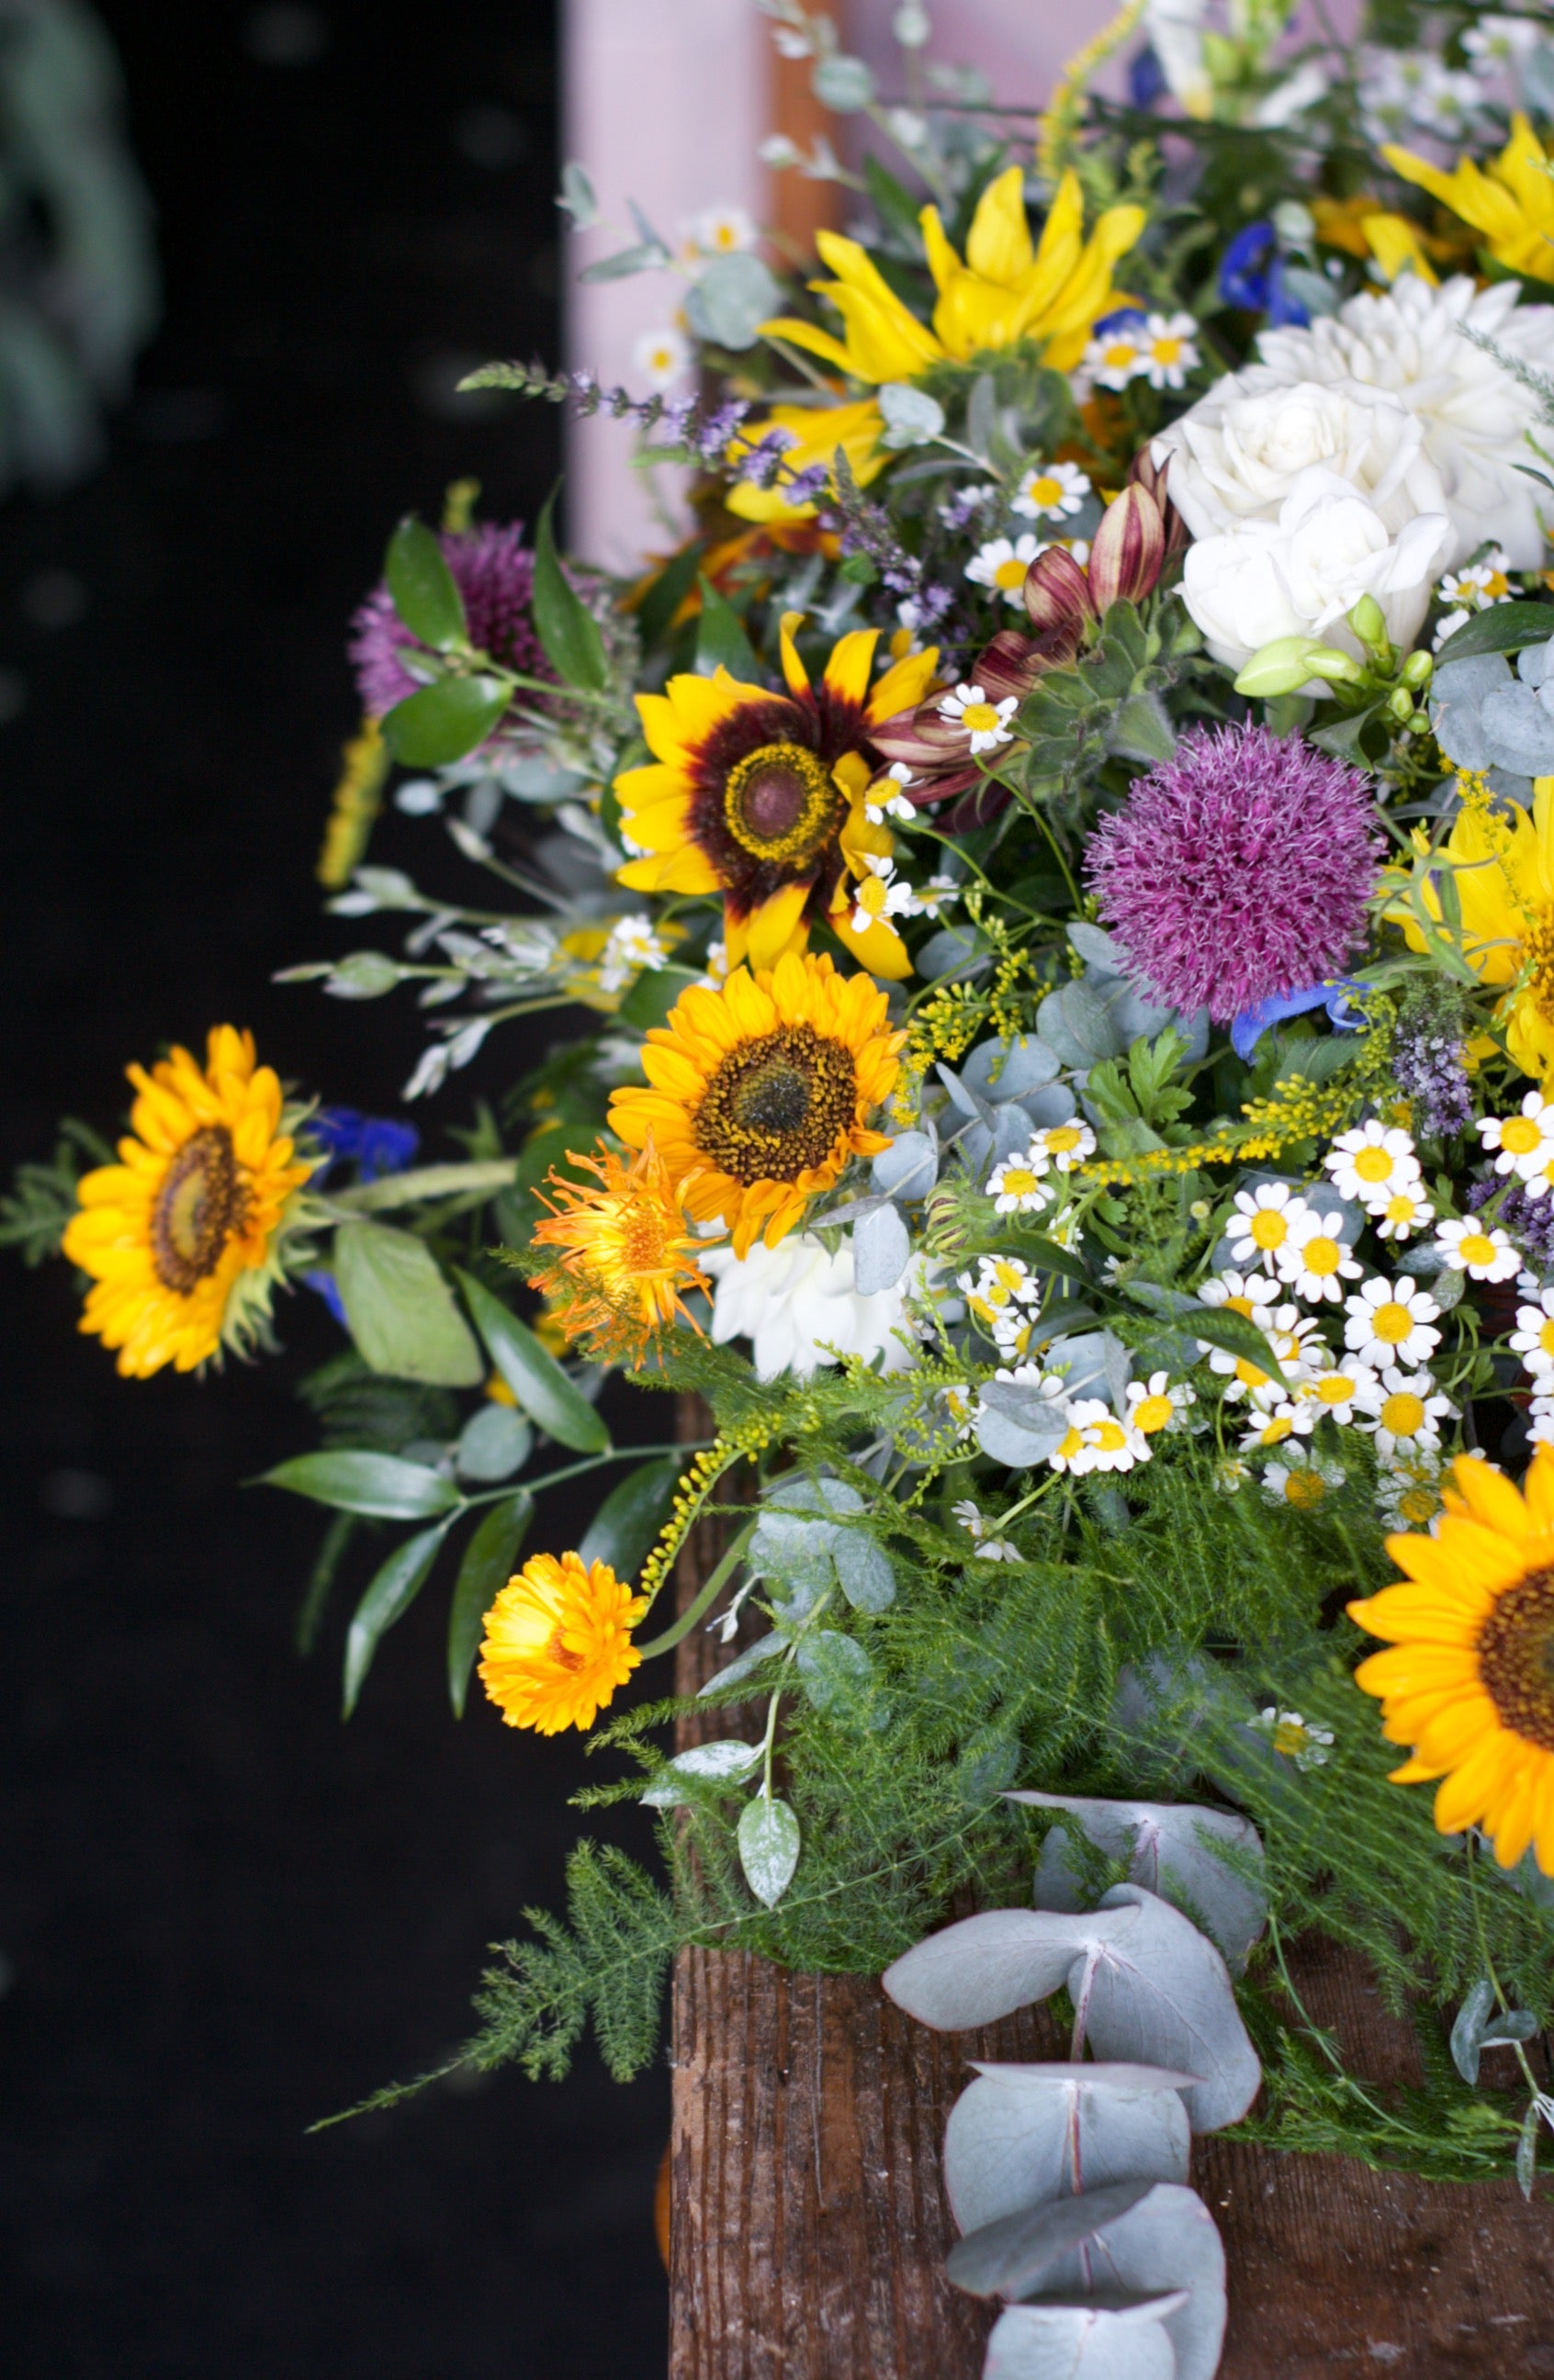 tigerlily florist guernsey flowers delivery wedding flowers wreath workshop